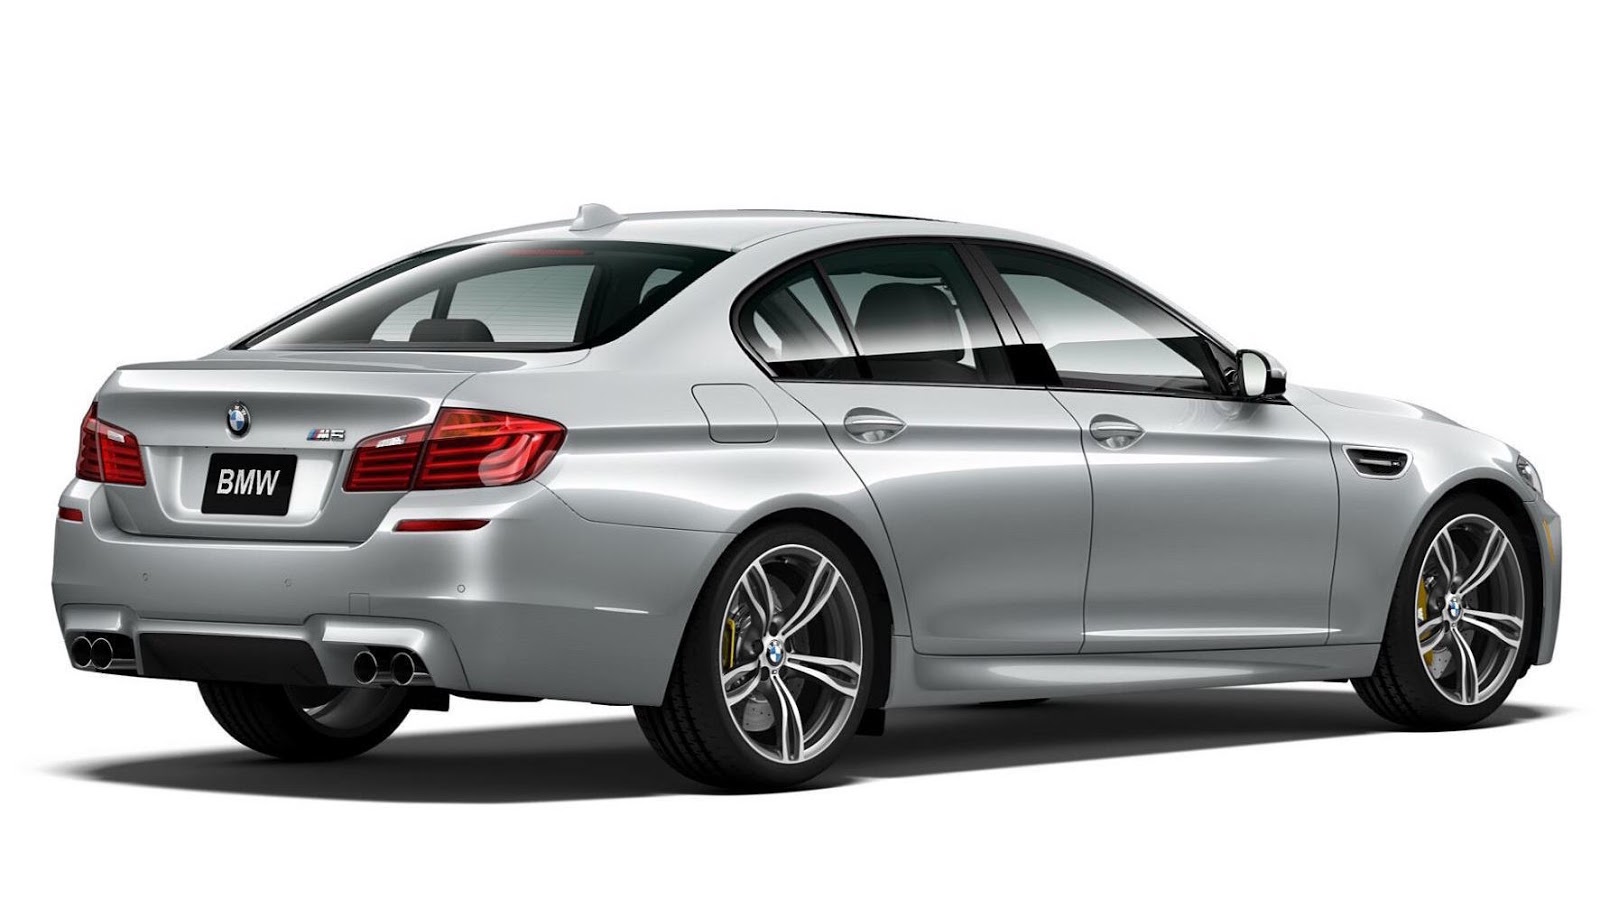 Ra mắt BMW M5 Pure Metal Silver bản giới hạn - 3